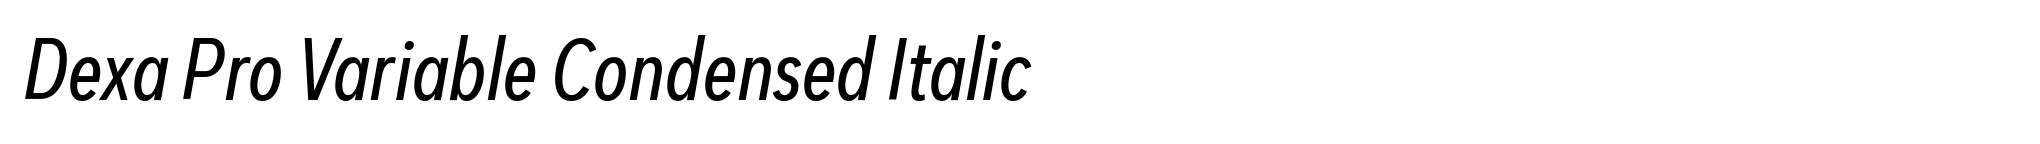 Dexa Pro Variable Condensed Italic image